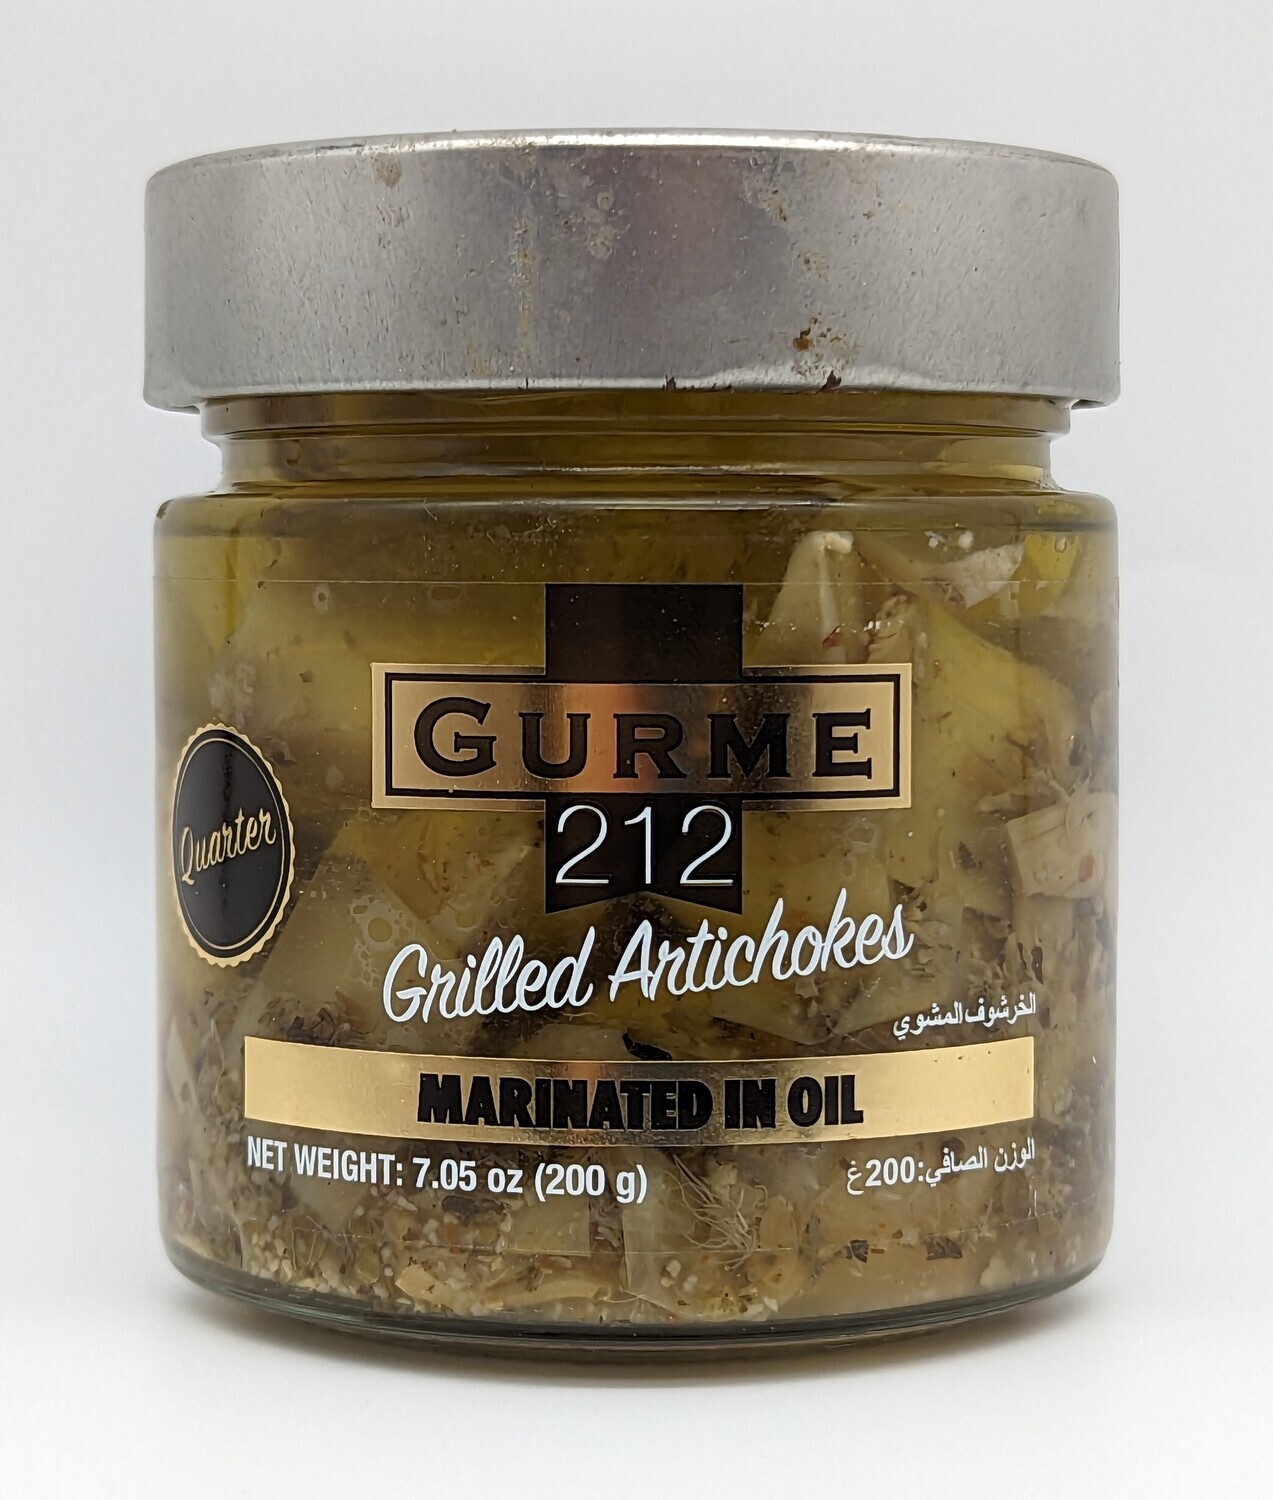 GURME 212 Gourmet Grilled Artichoke Quarters Marinated in Oil 7.05oz 200g